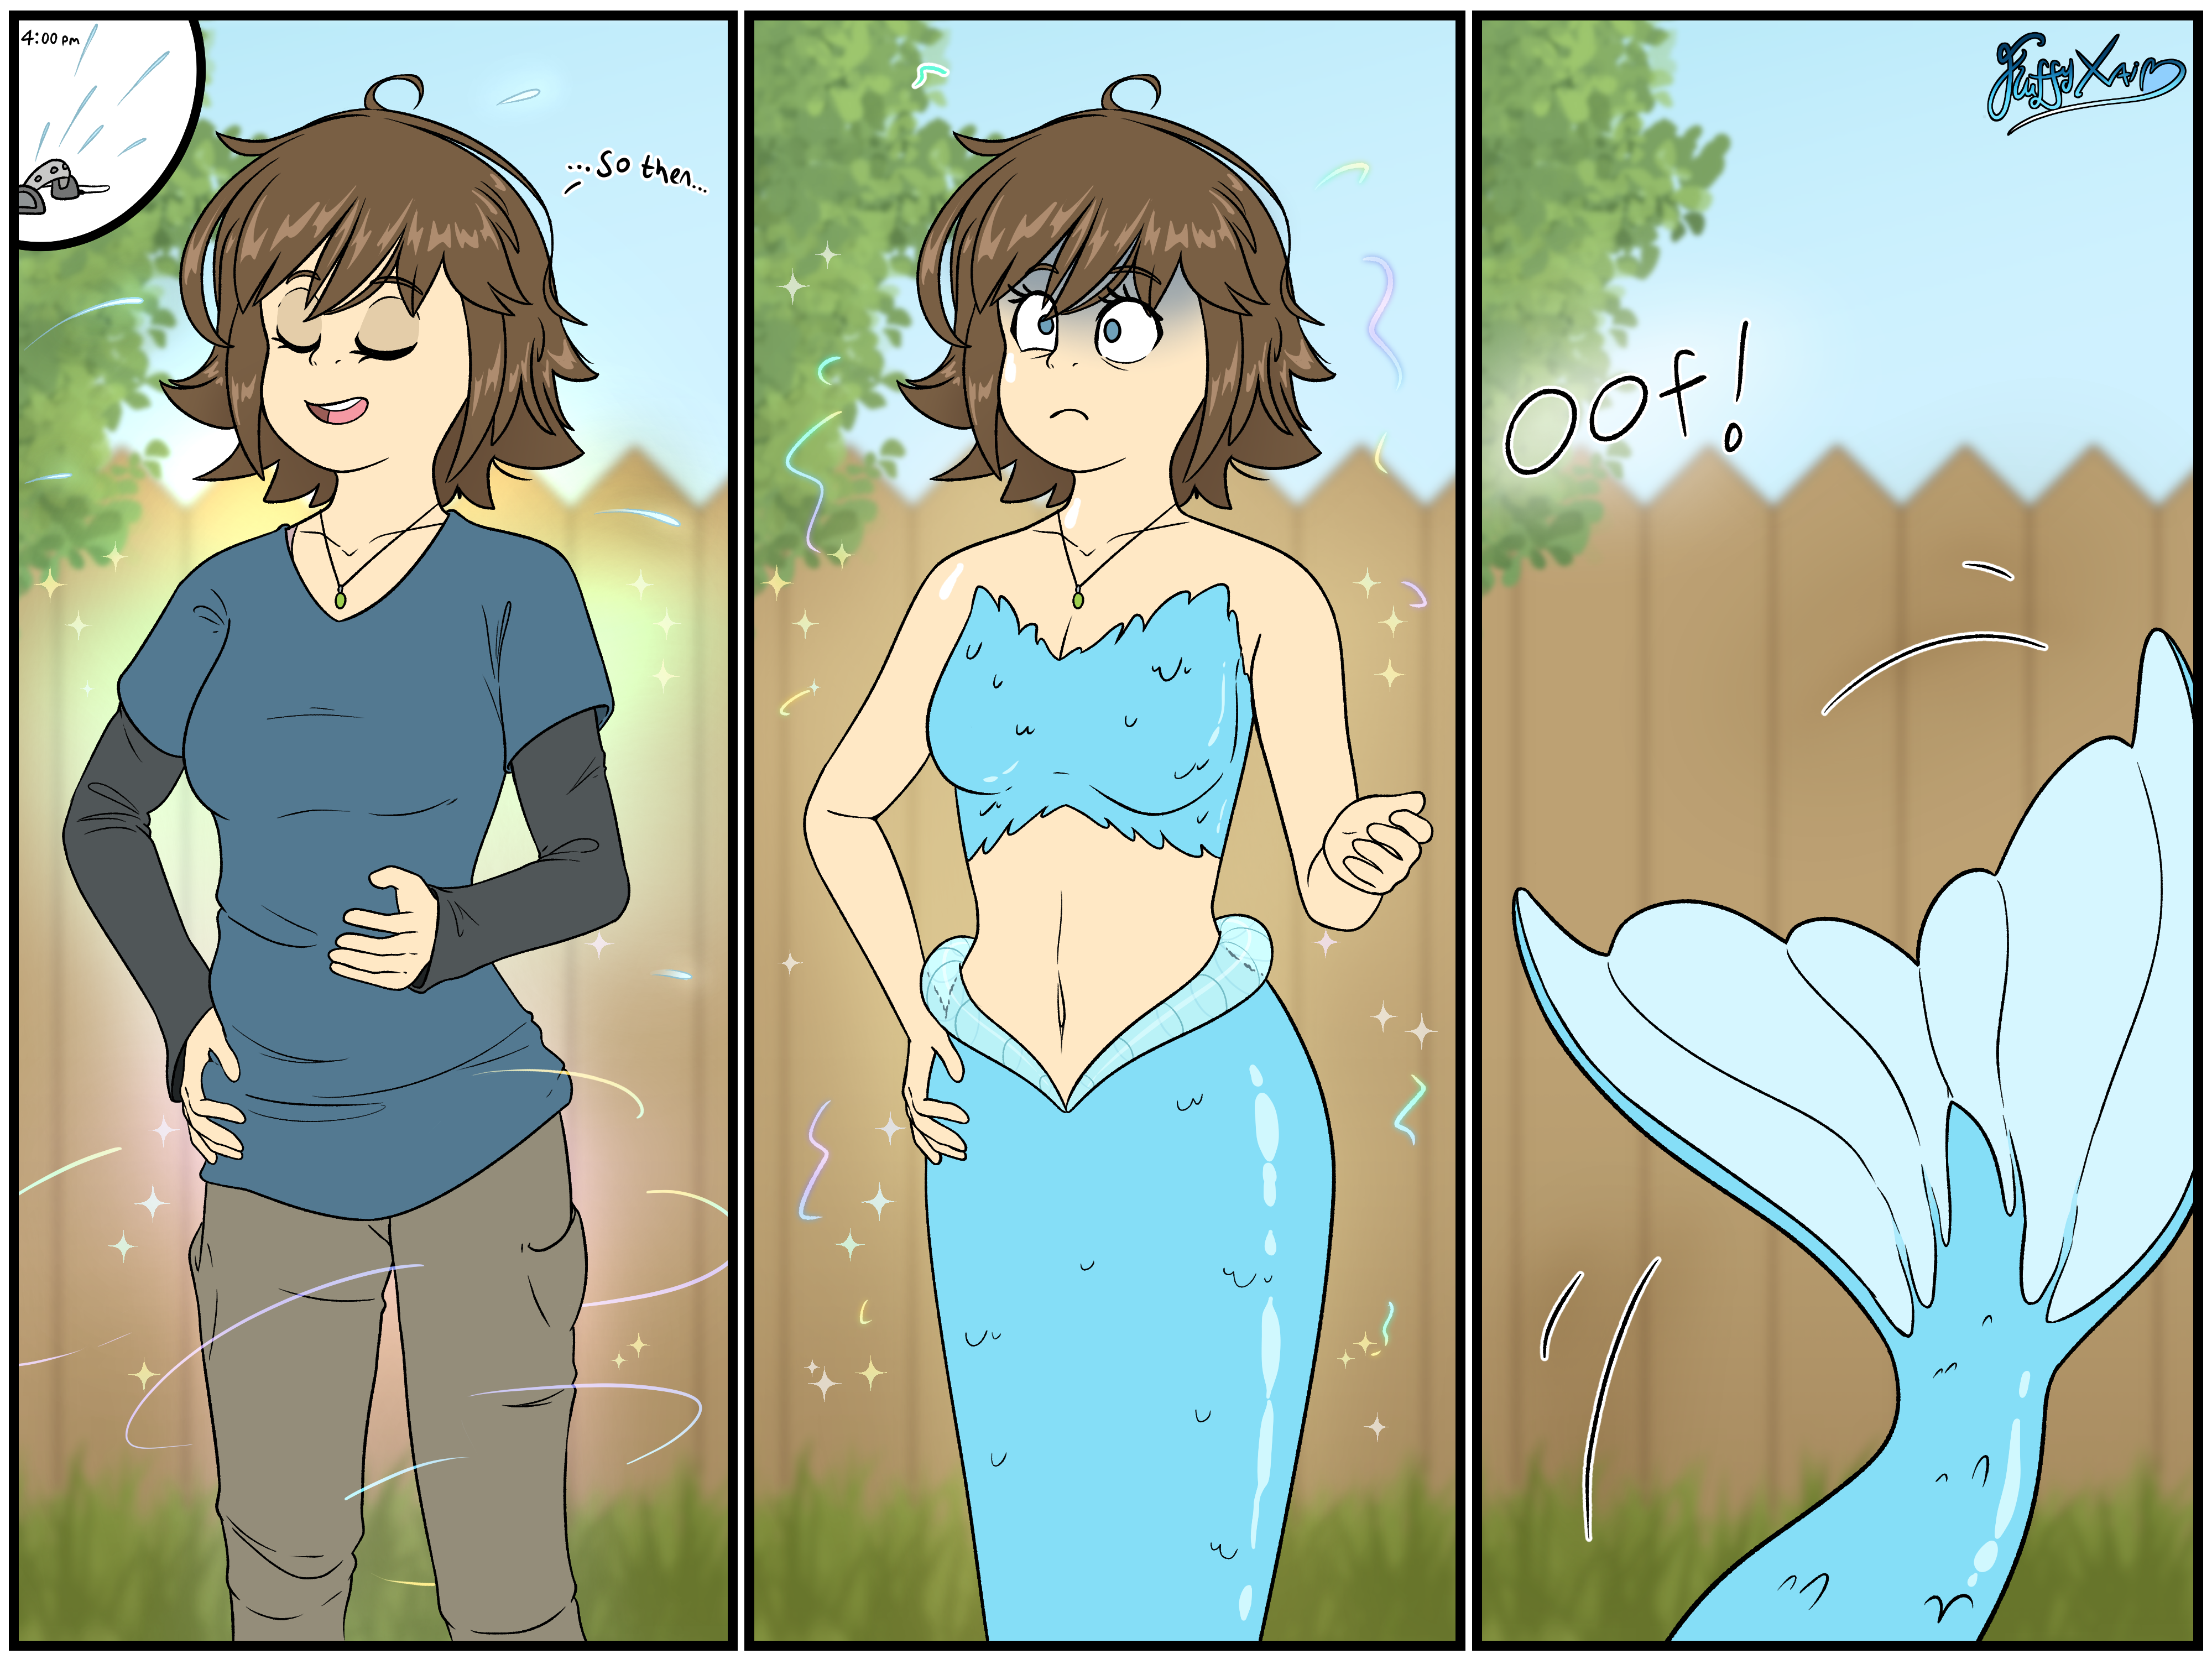 mermaid transformation into human